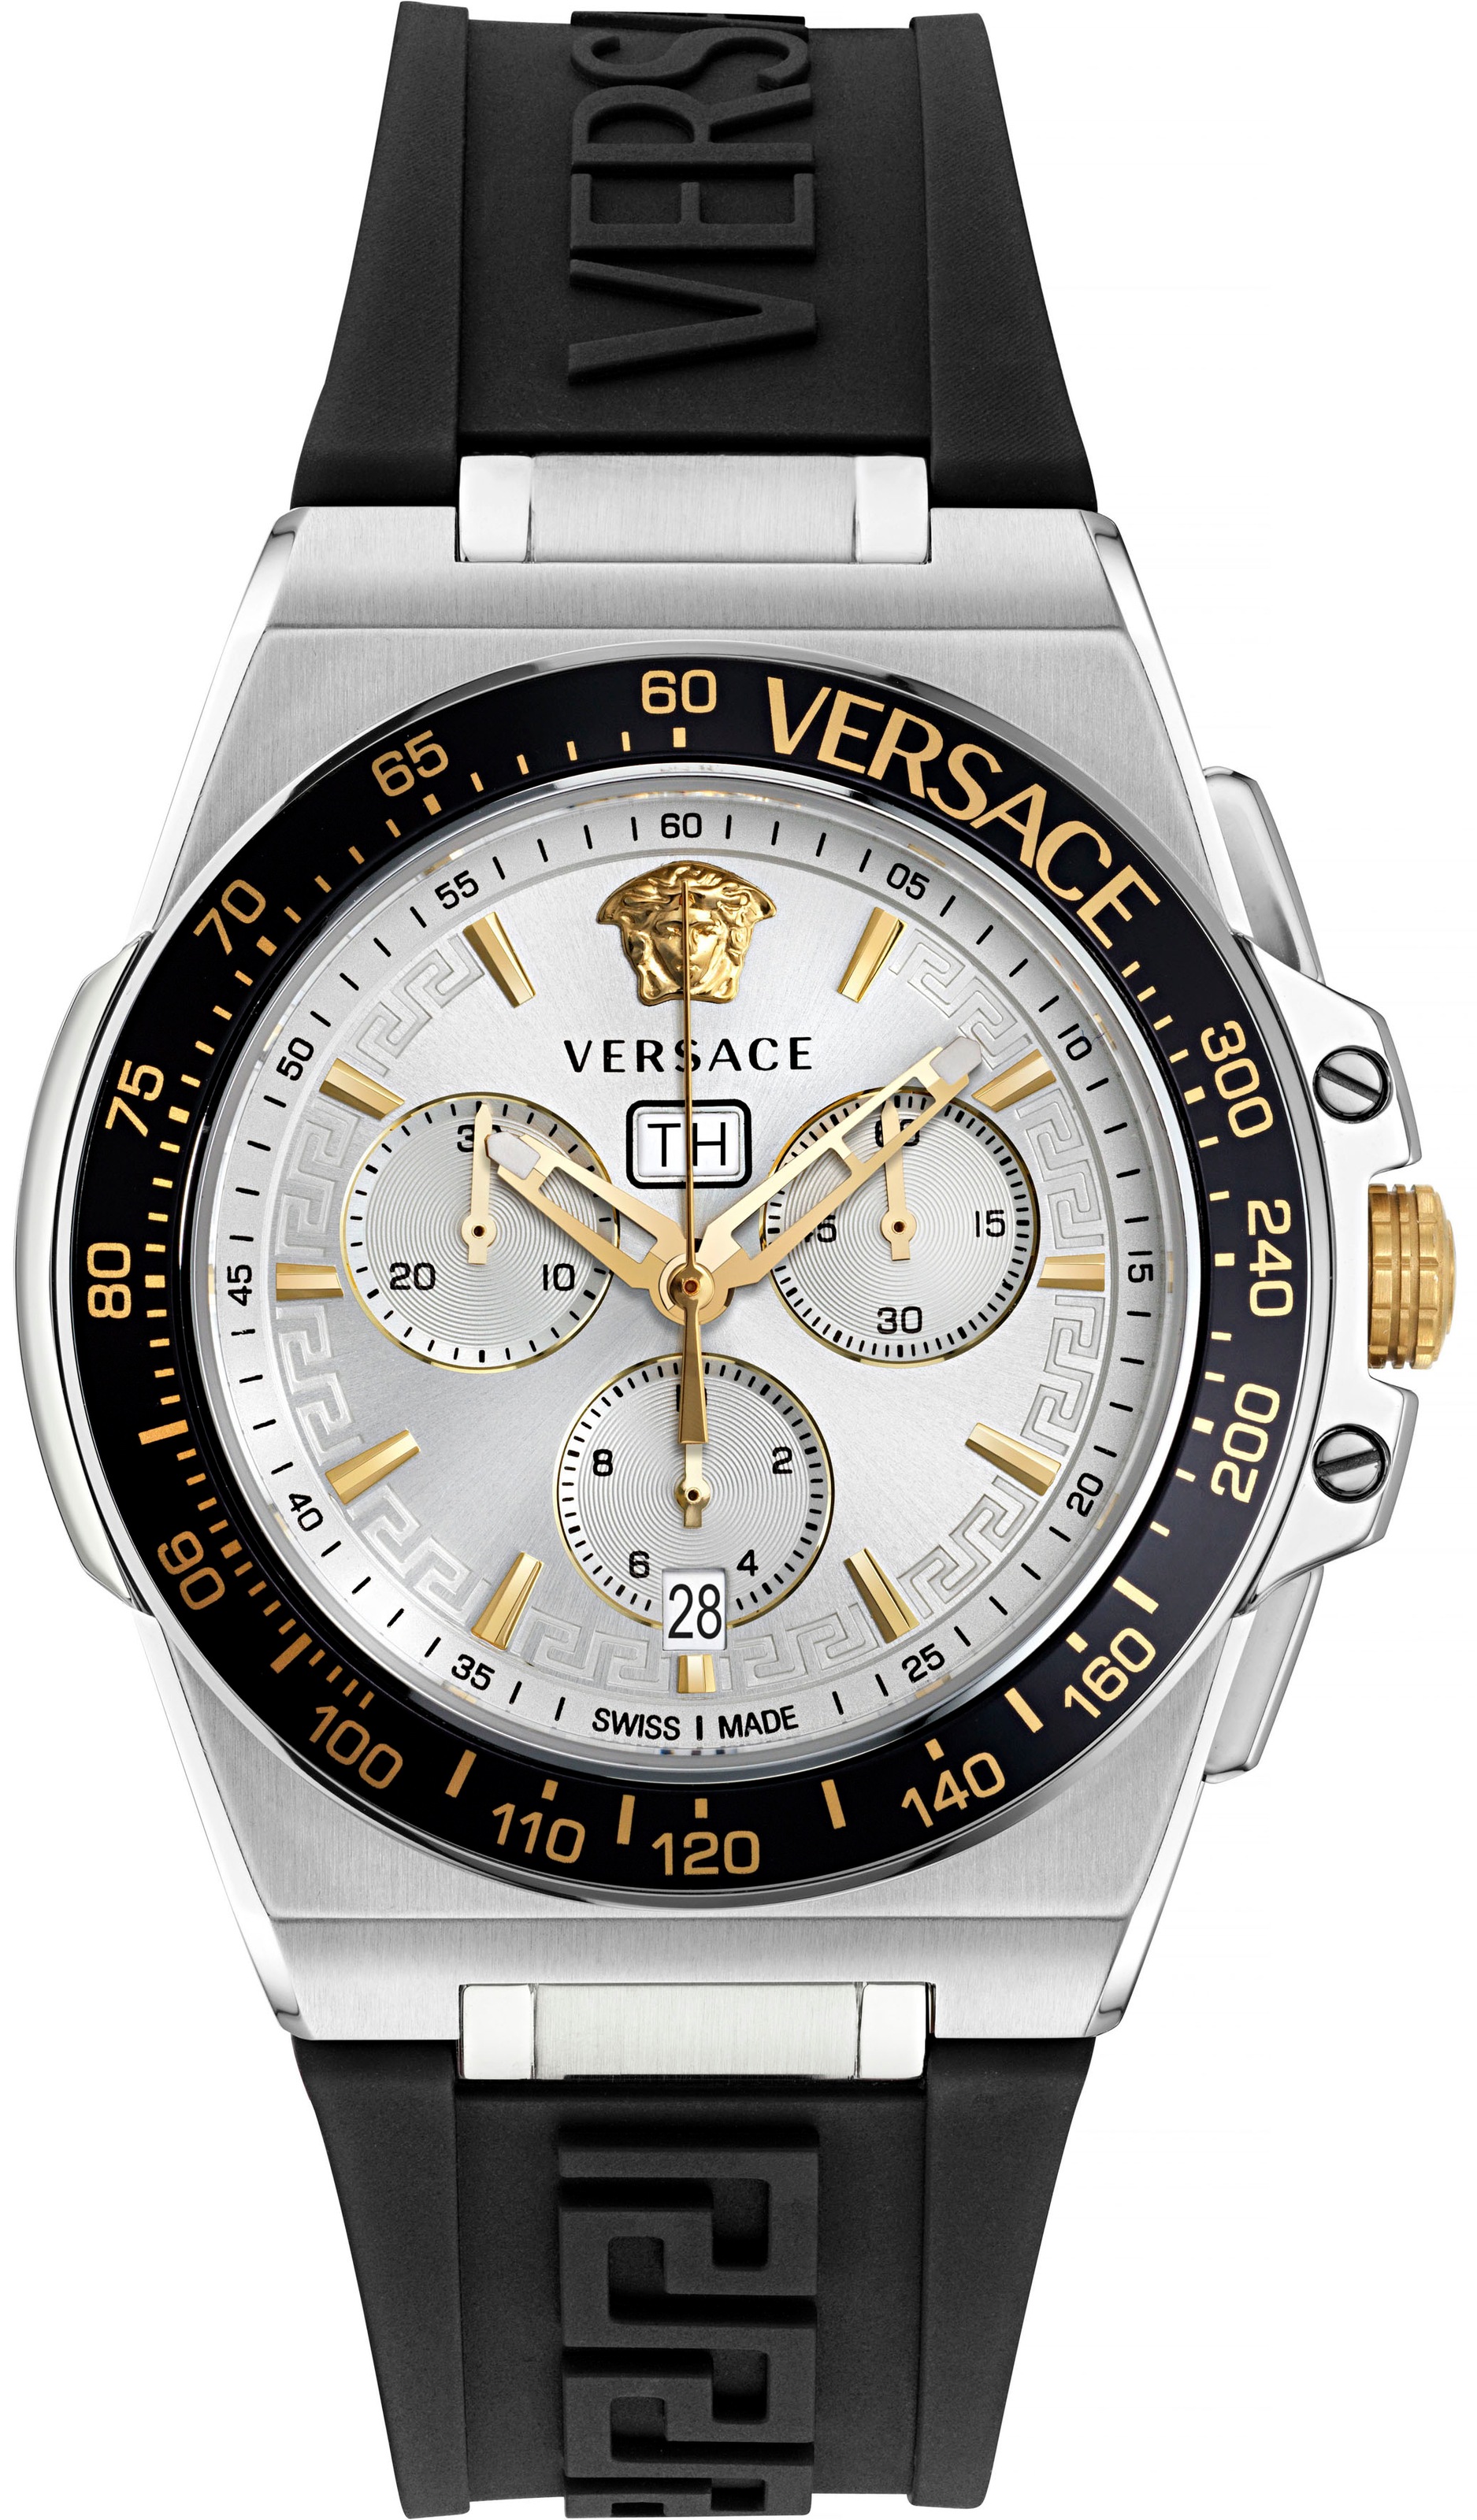 EXTREME BAUR »GRECA kaufen ▷ Versace VE7H00123« Chronograph CHRONO, |